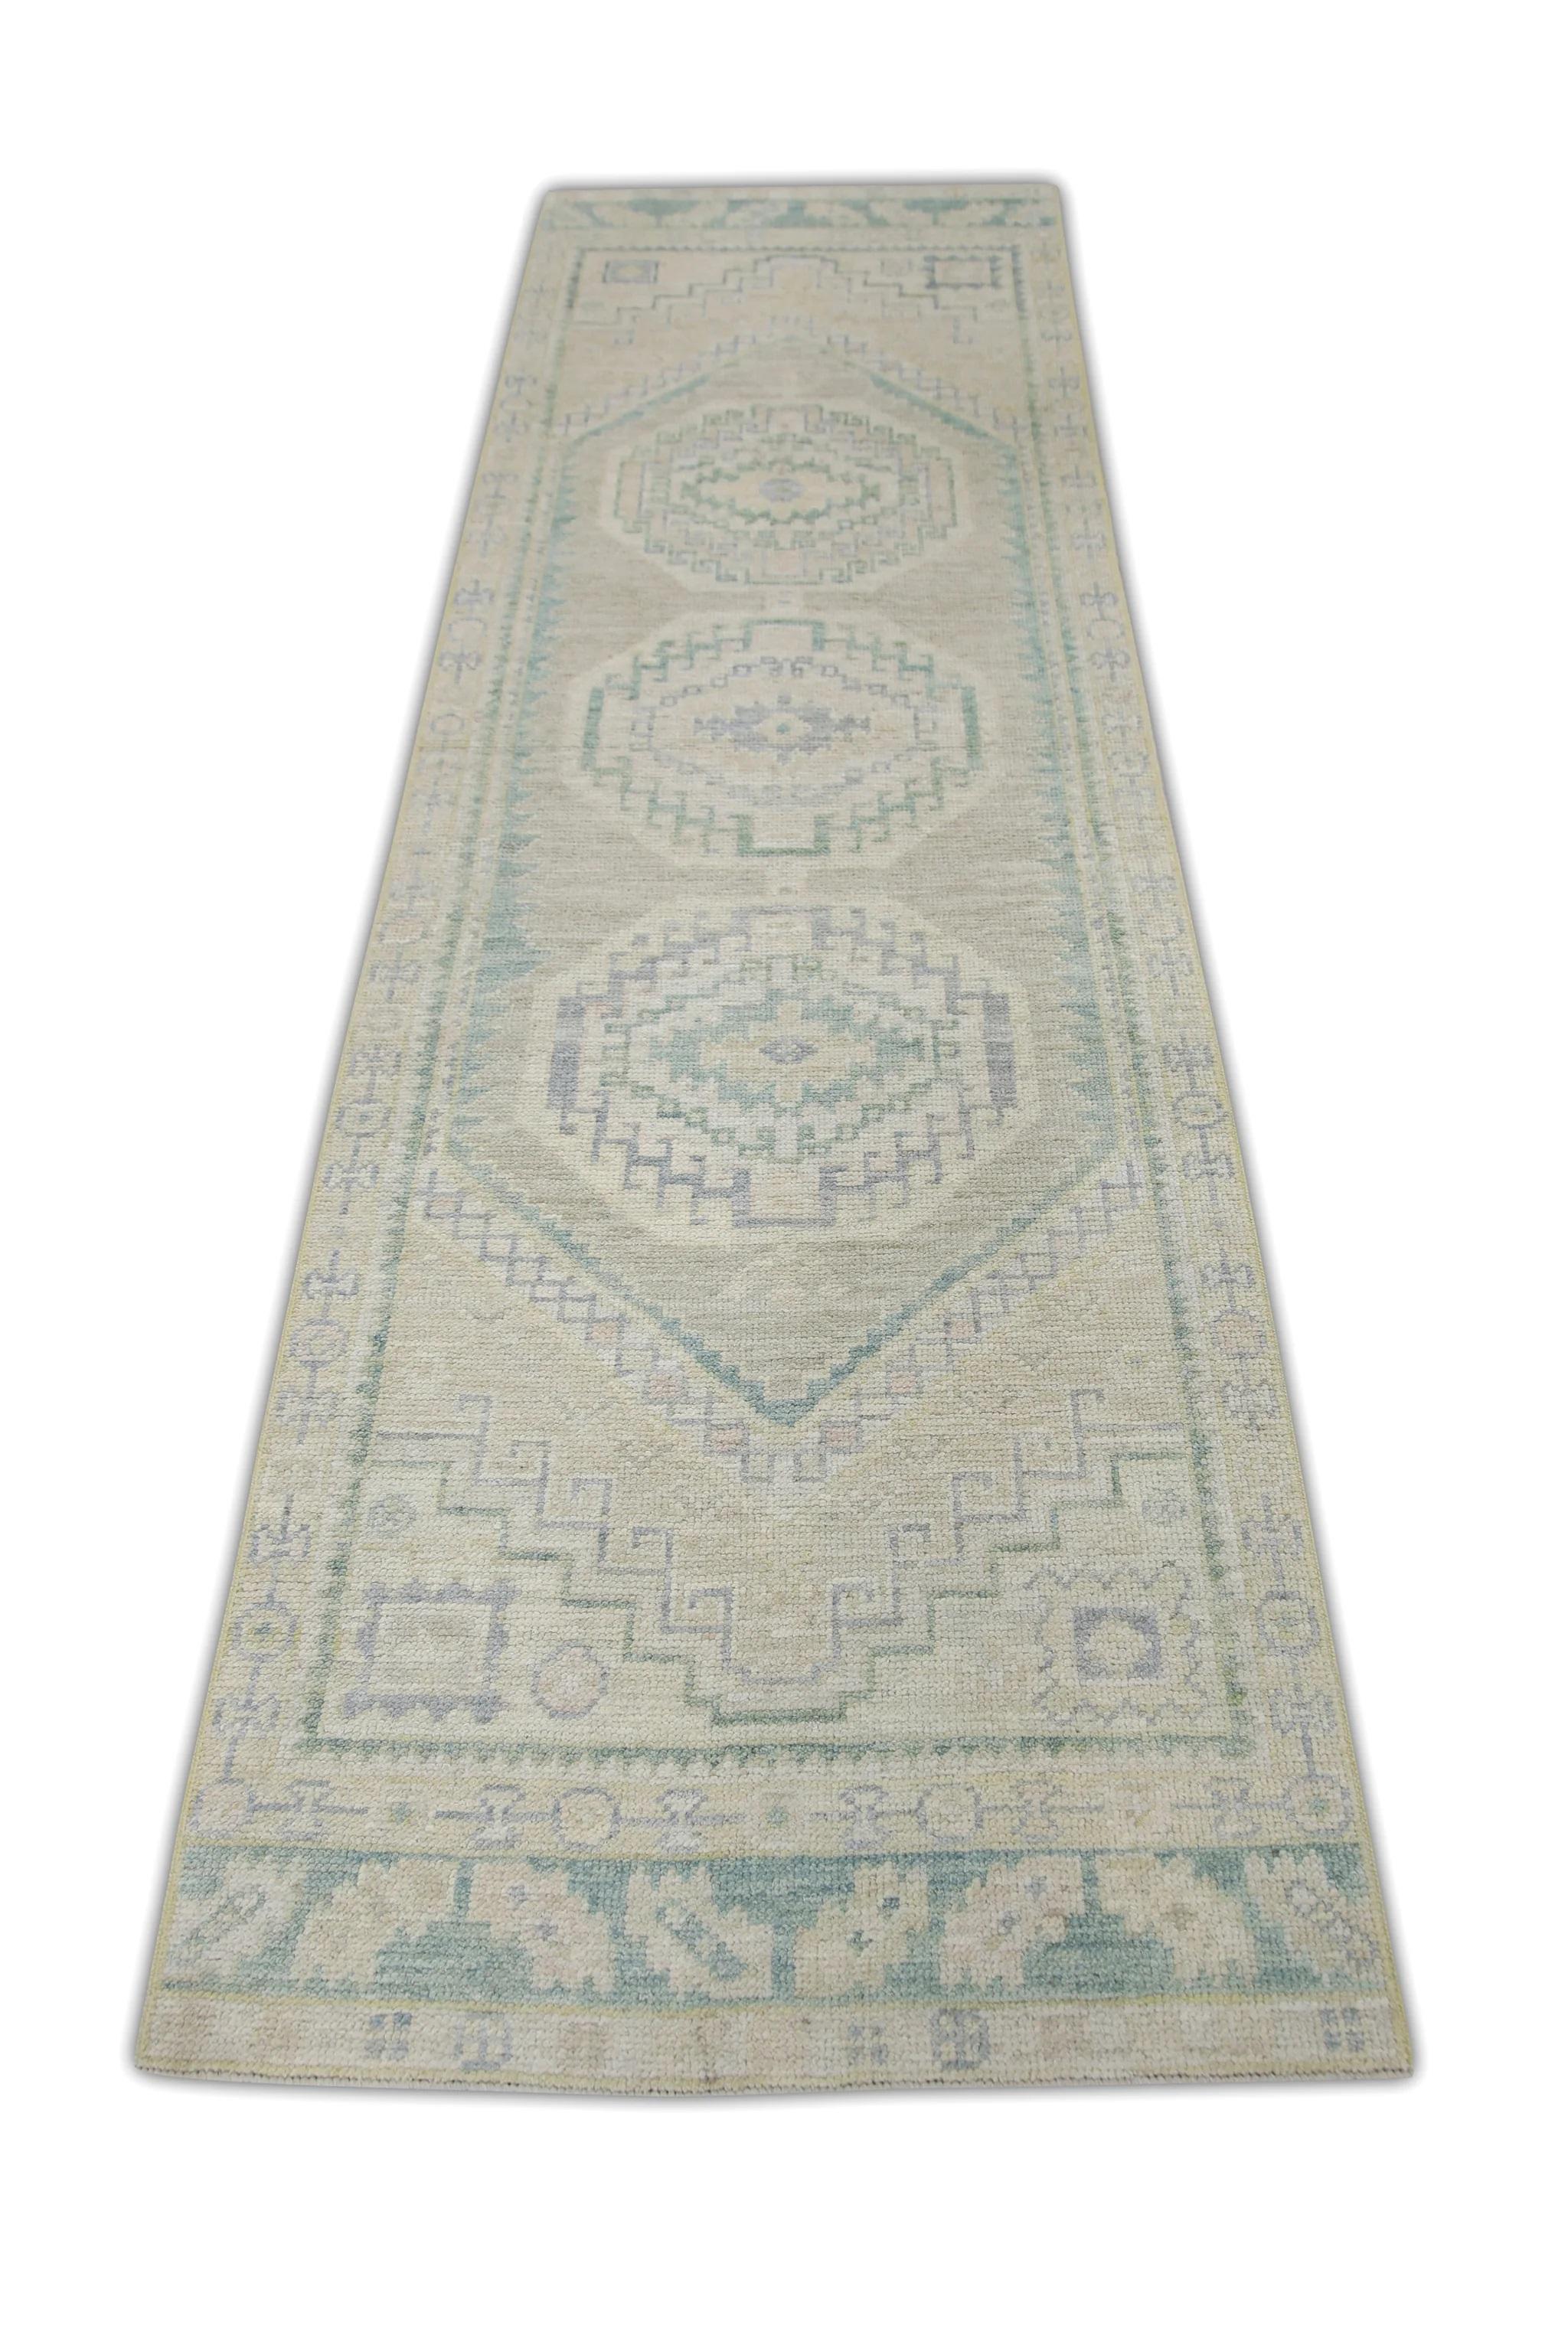 Contemporary Medallion Design Handwoven Wool Turkish Oushak Rug in Blue & Green 2'10